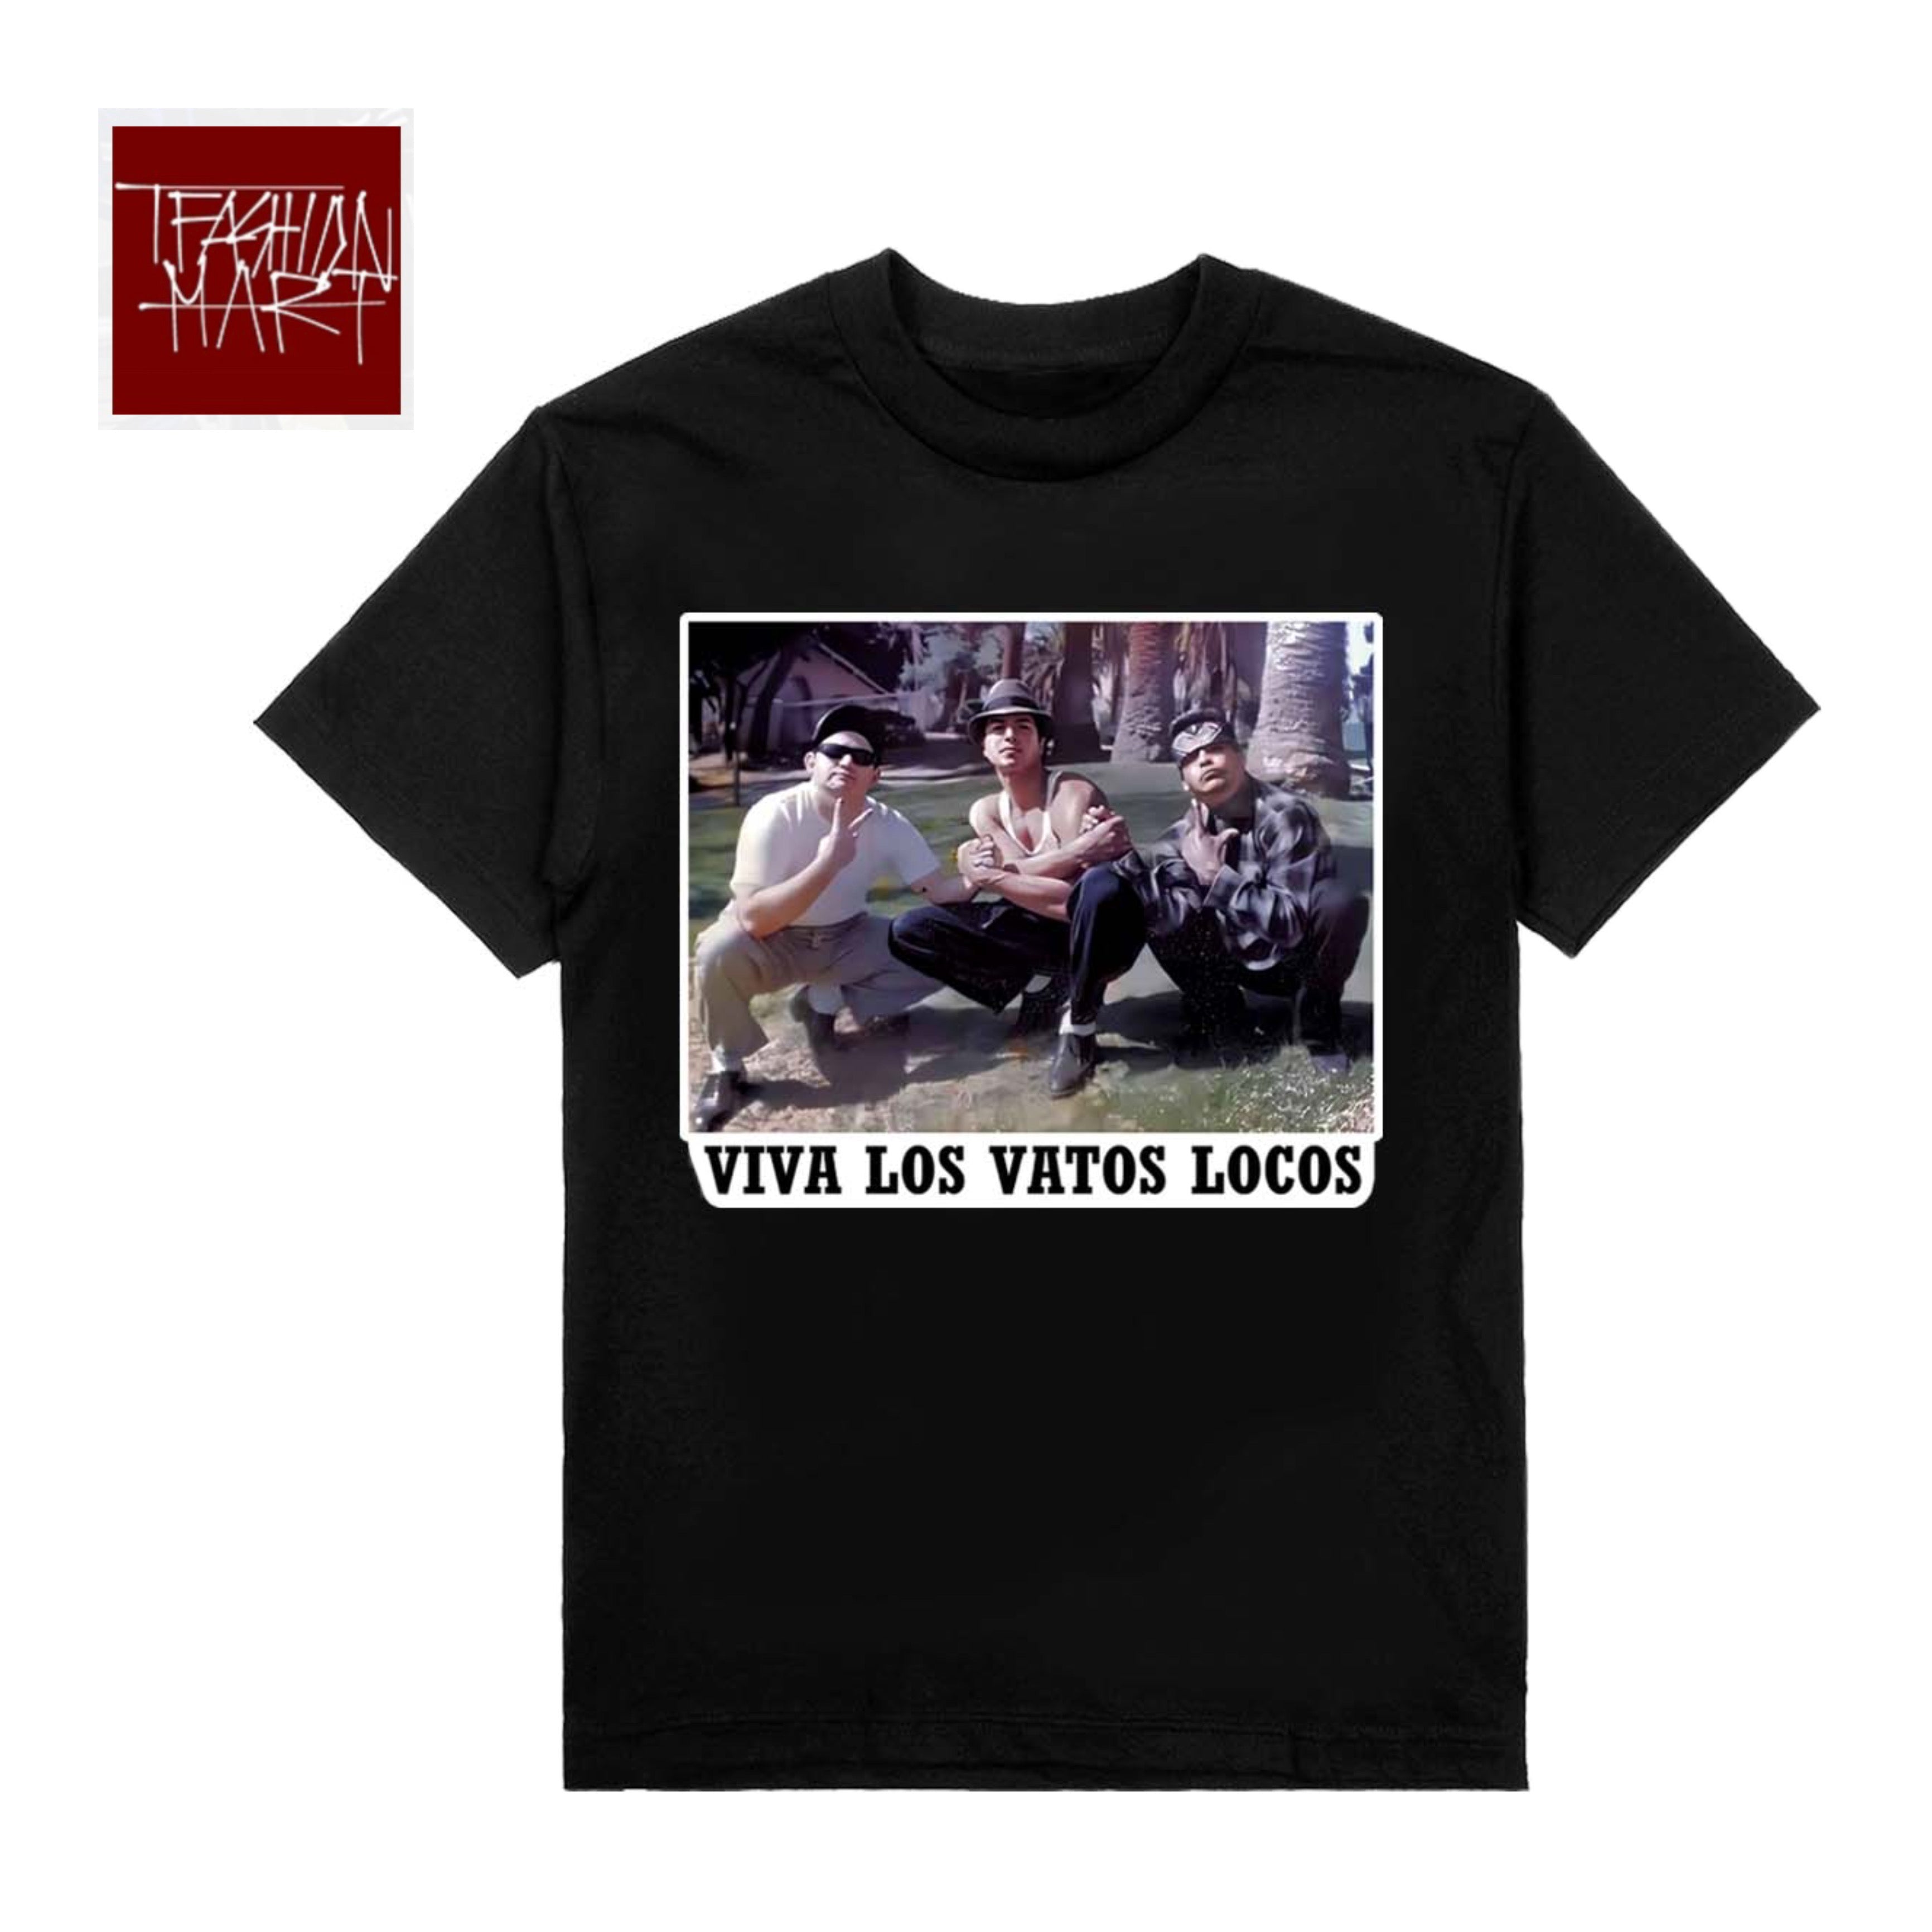 TFashion Graphic Tee - Viva Los Vatos Locos